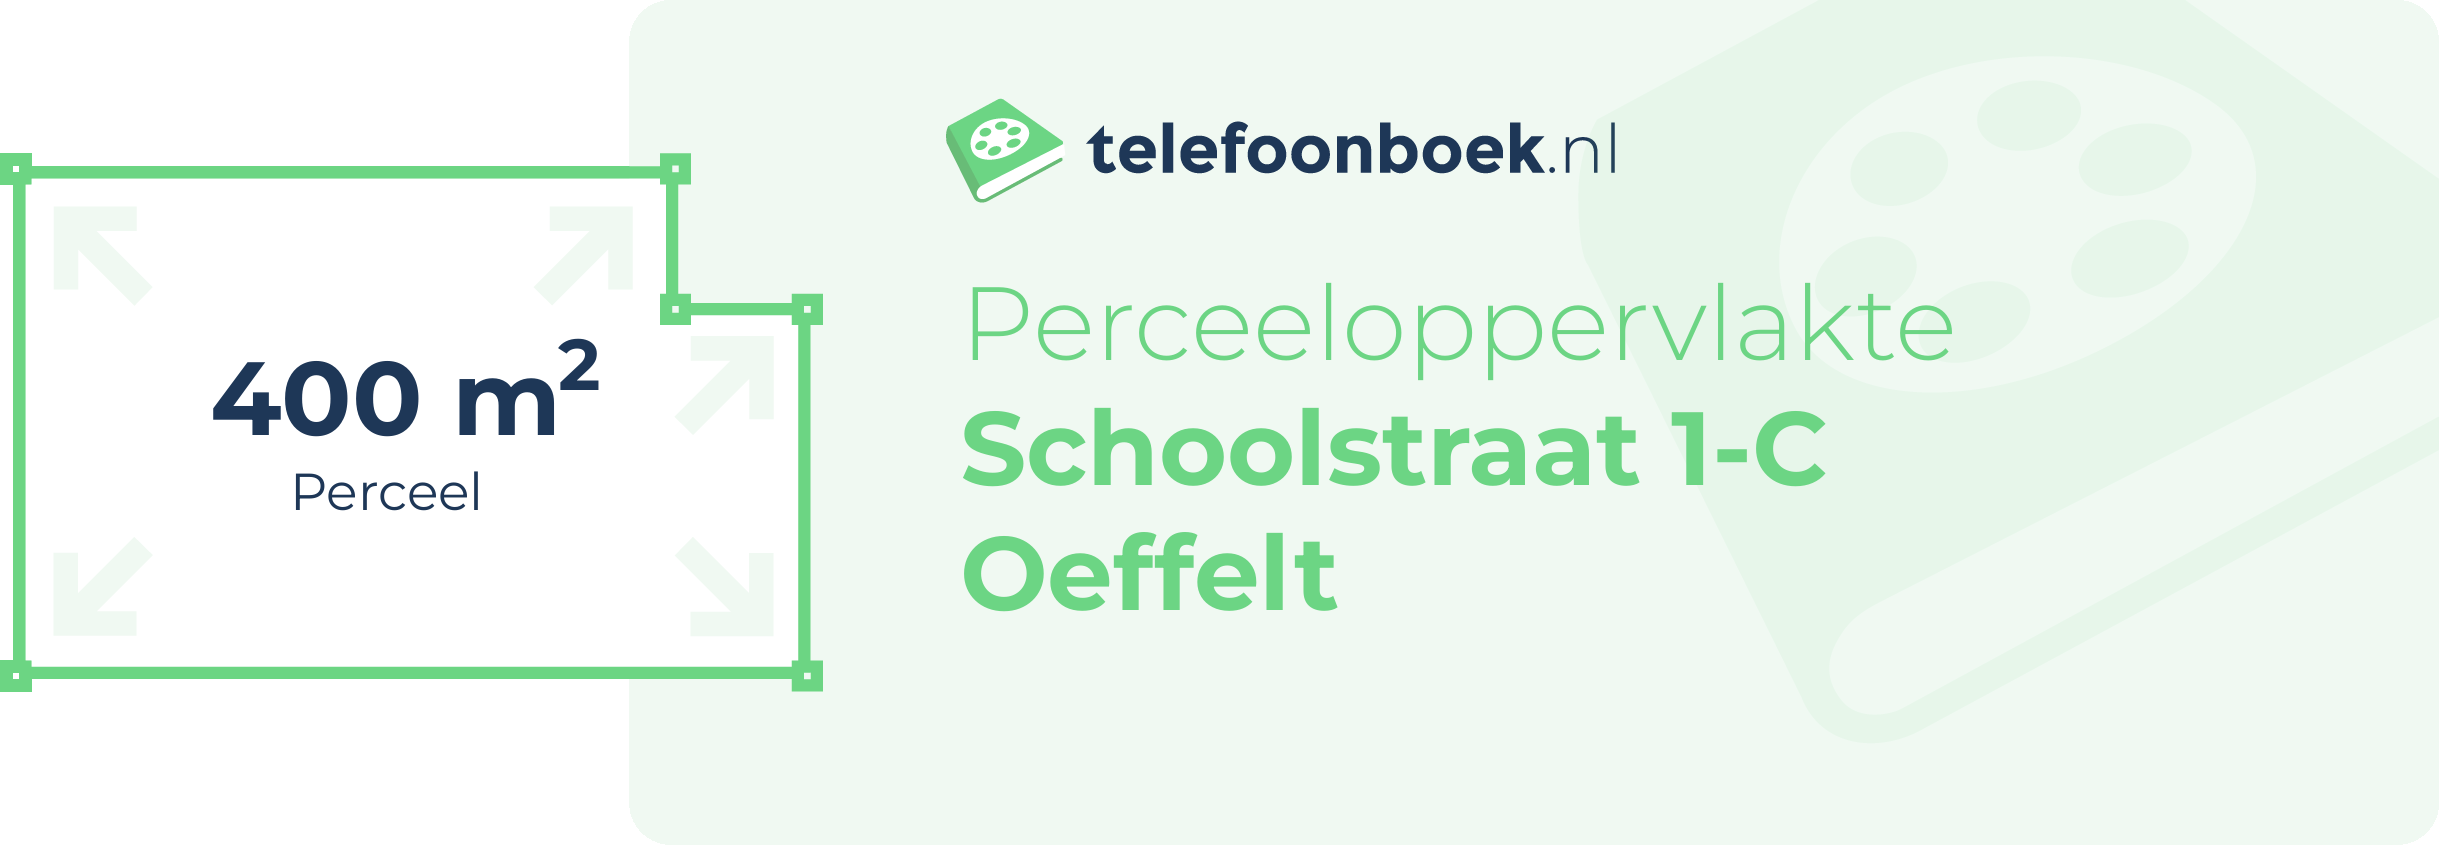 Perceeloppervlakte Schoolstraat 1-C Oeffelt